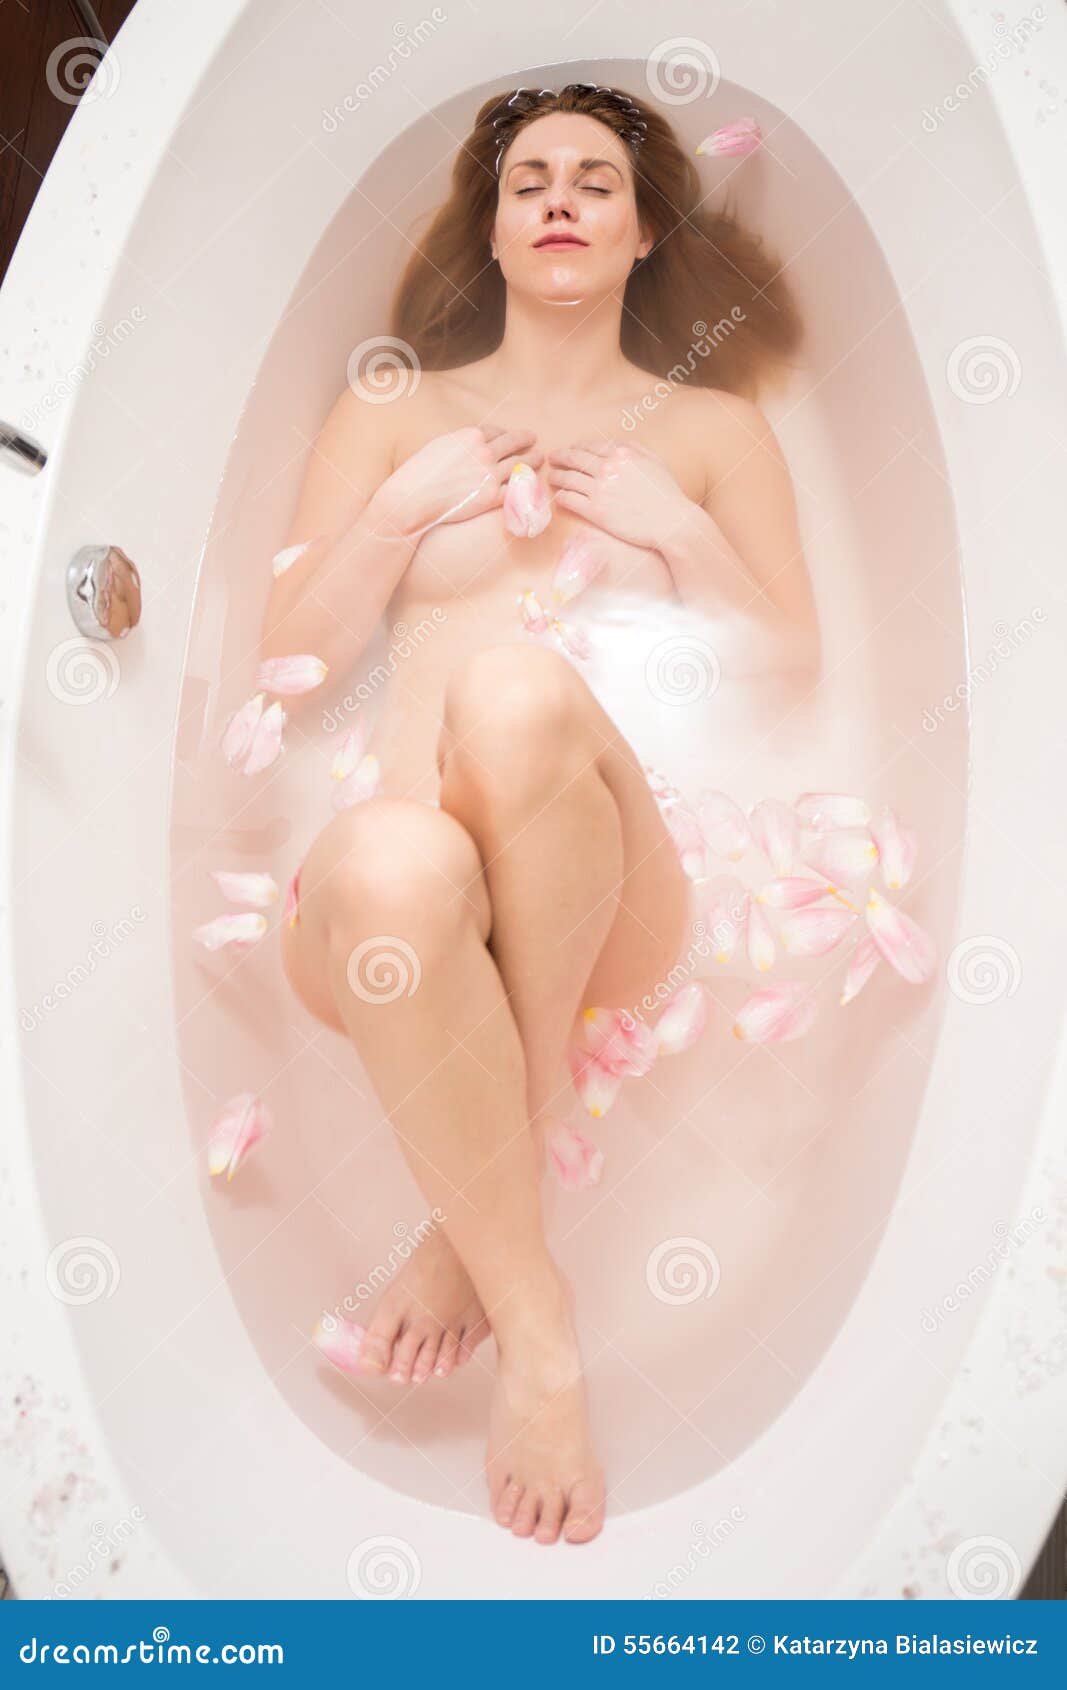 Naked in a bathtub